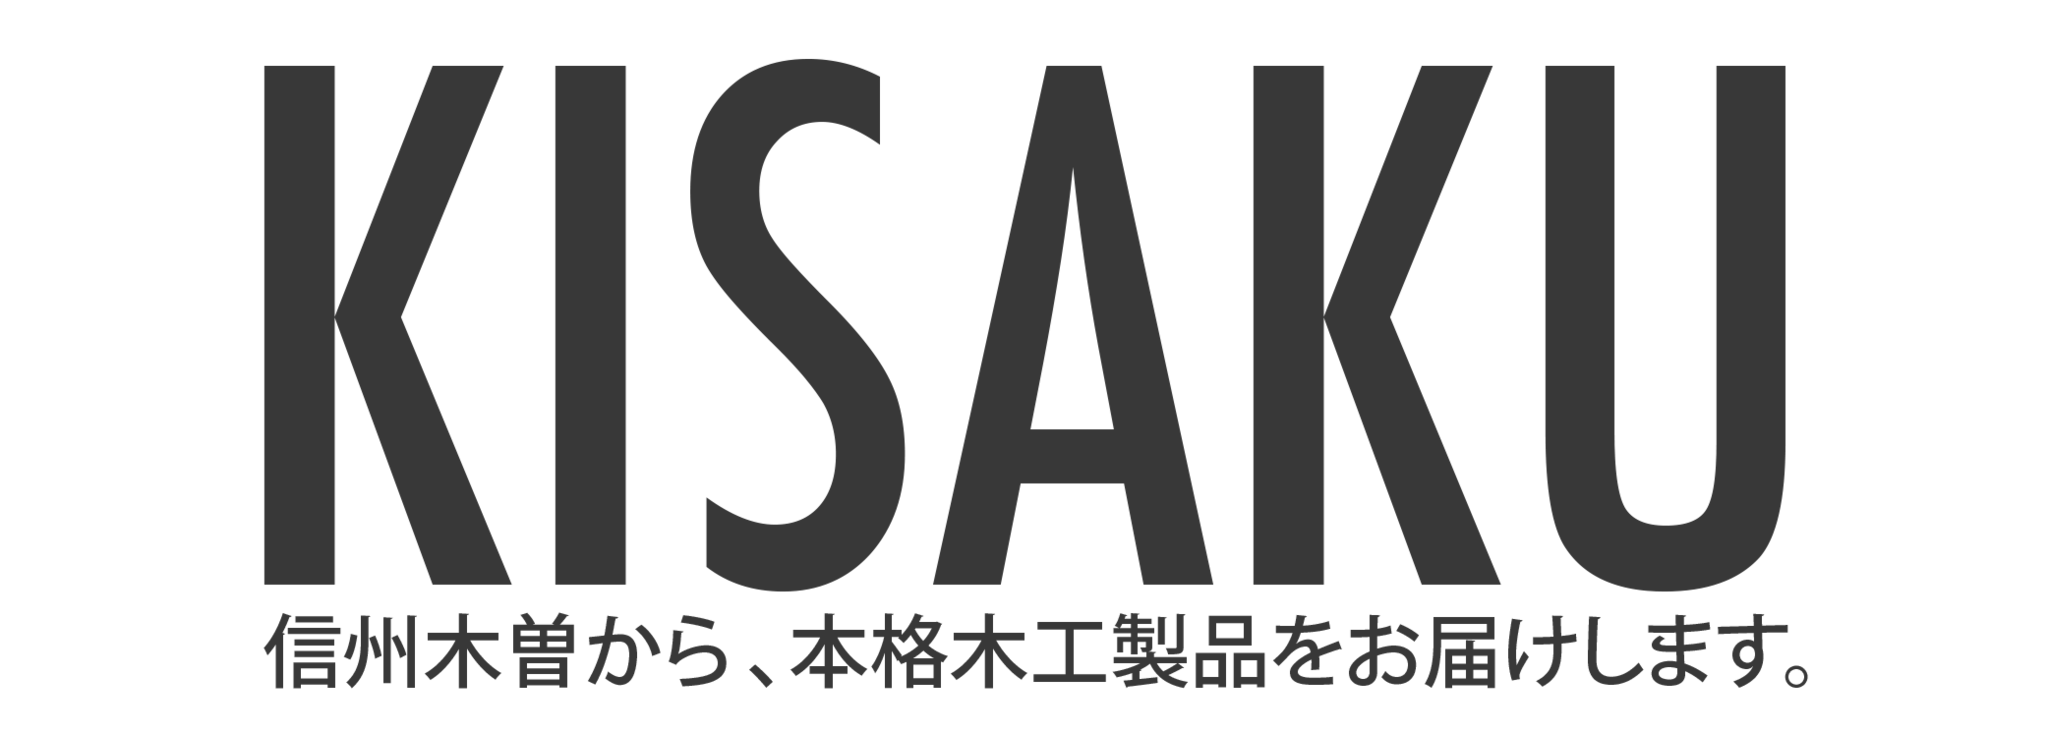 KISAKU（キサク）〜信州木曽から、本格木工製品をお届けします。〜